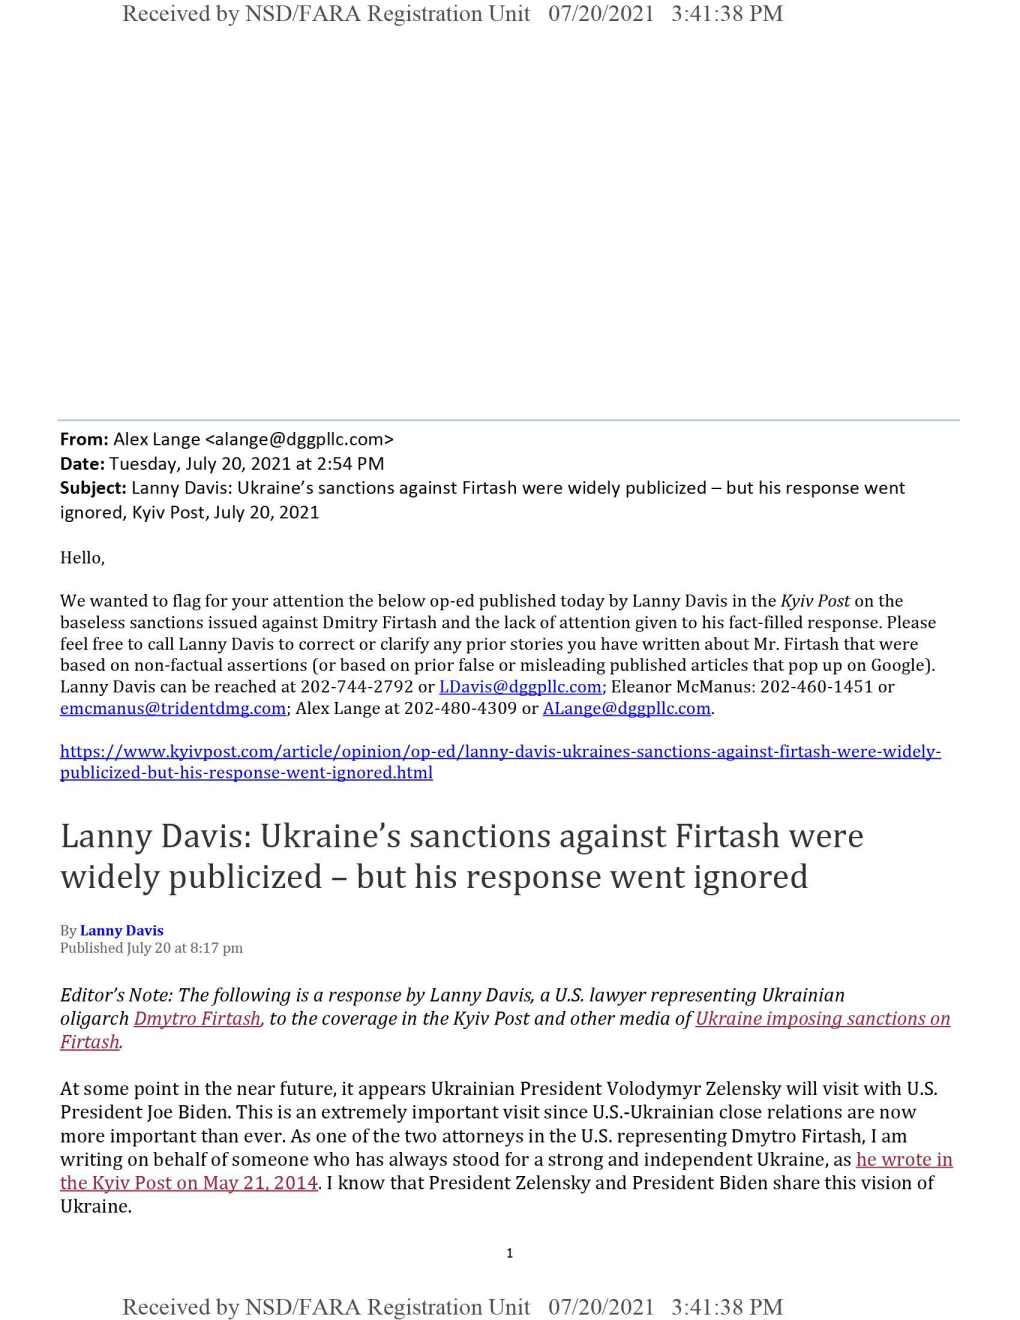 Lanny Davis: Ukraine's Sanctions Against Firtash Were Widely Publicized - but His Response Went Ignored, Kyiv Post, July 20, 2021